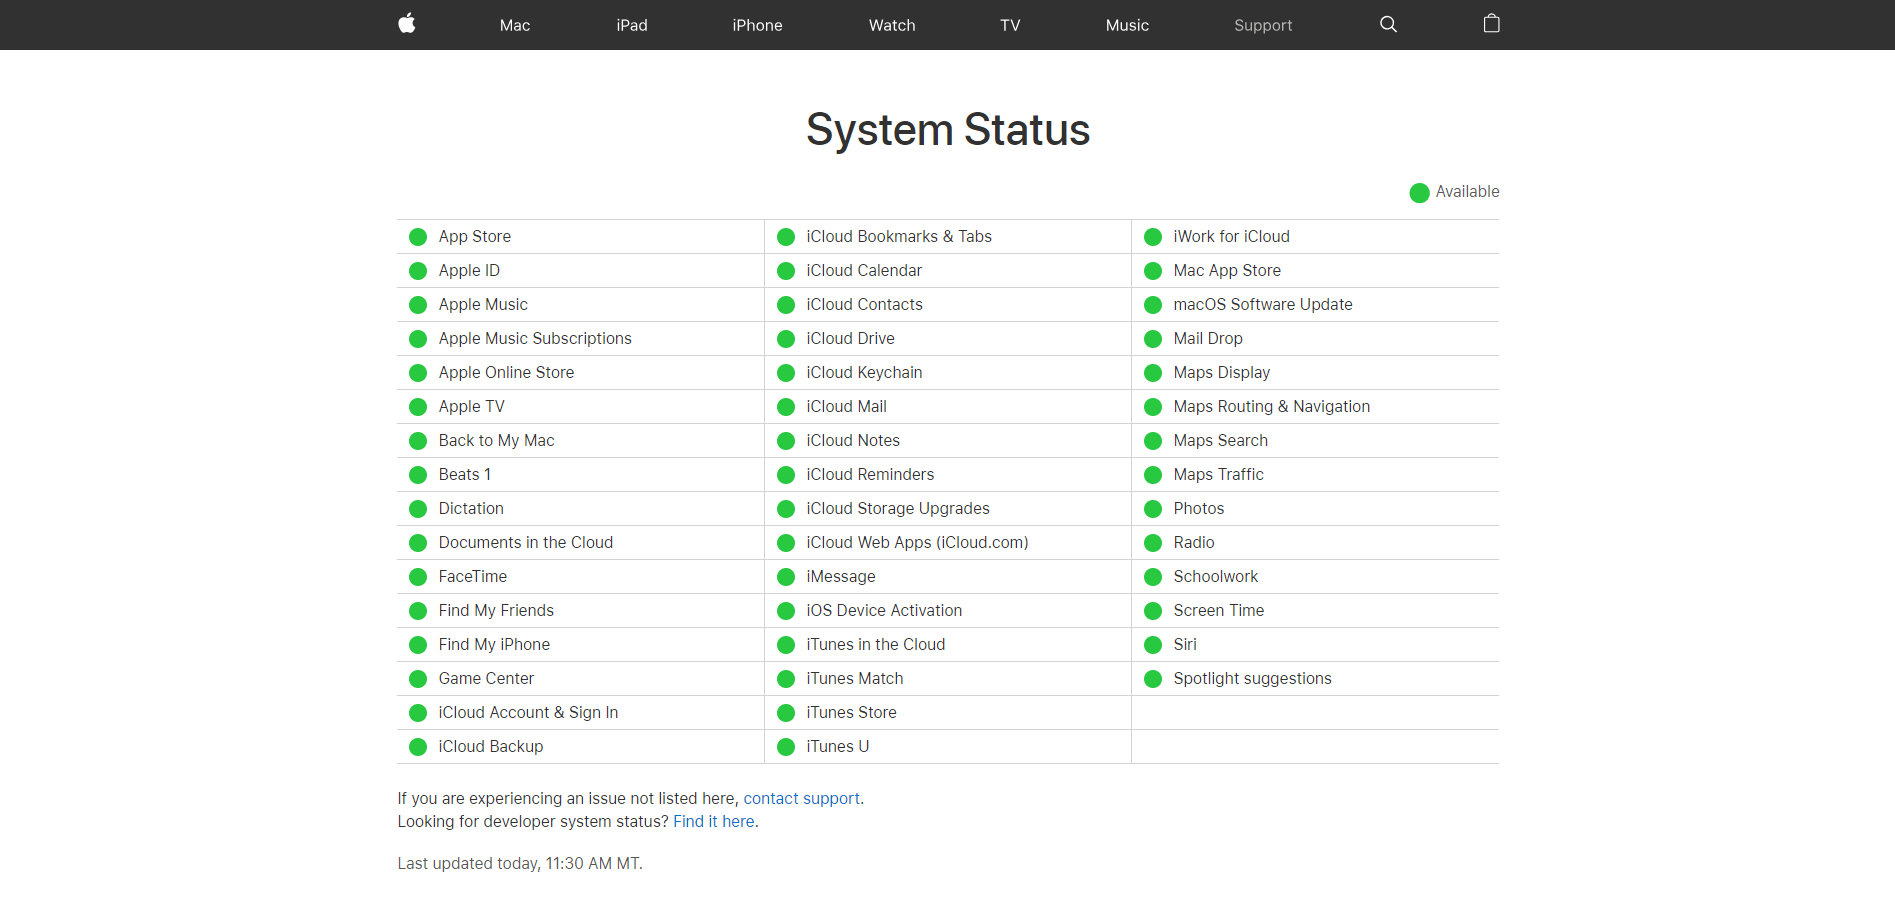 Apple TV+ System Status